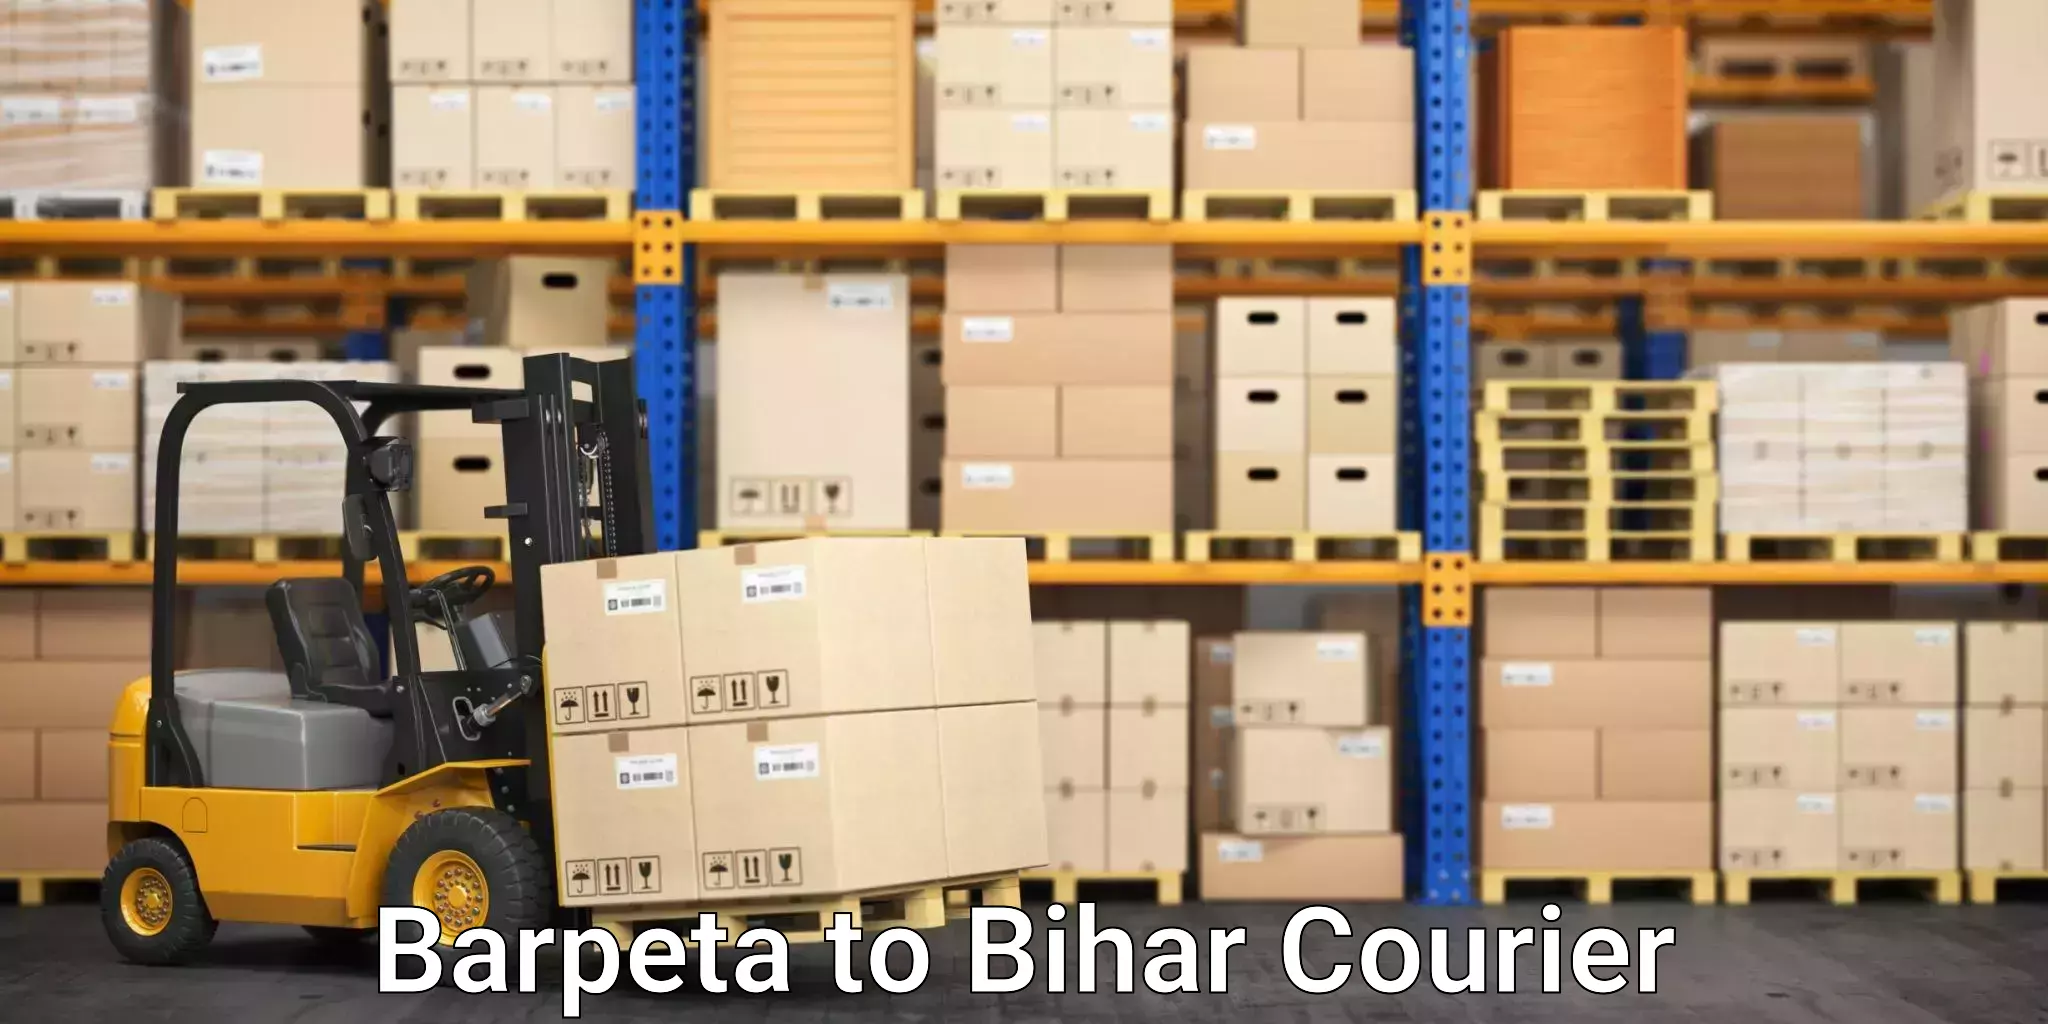 Efficient courier operations Barpeta to Bihar